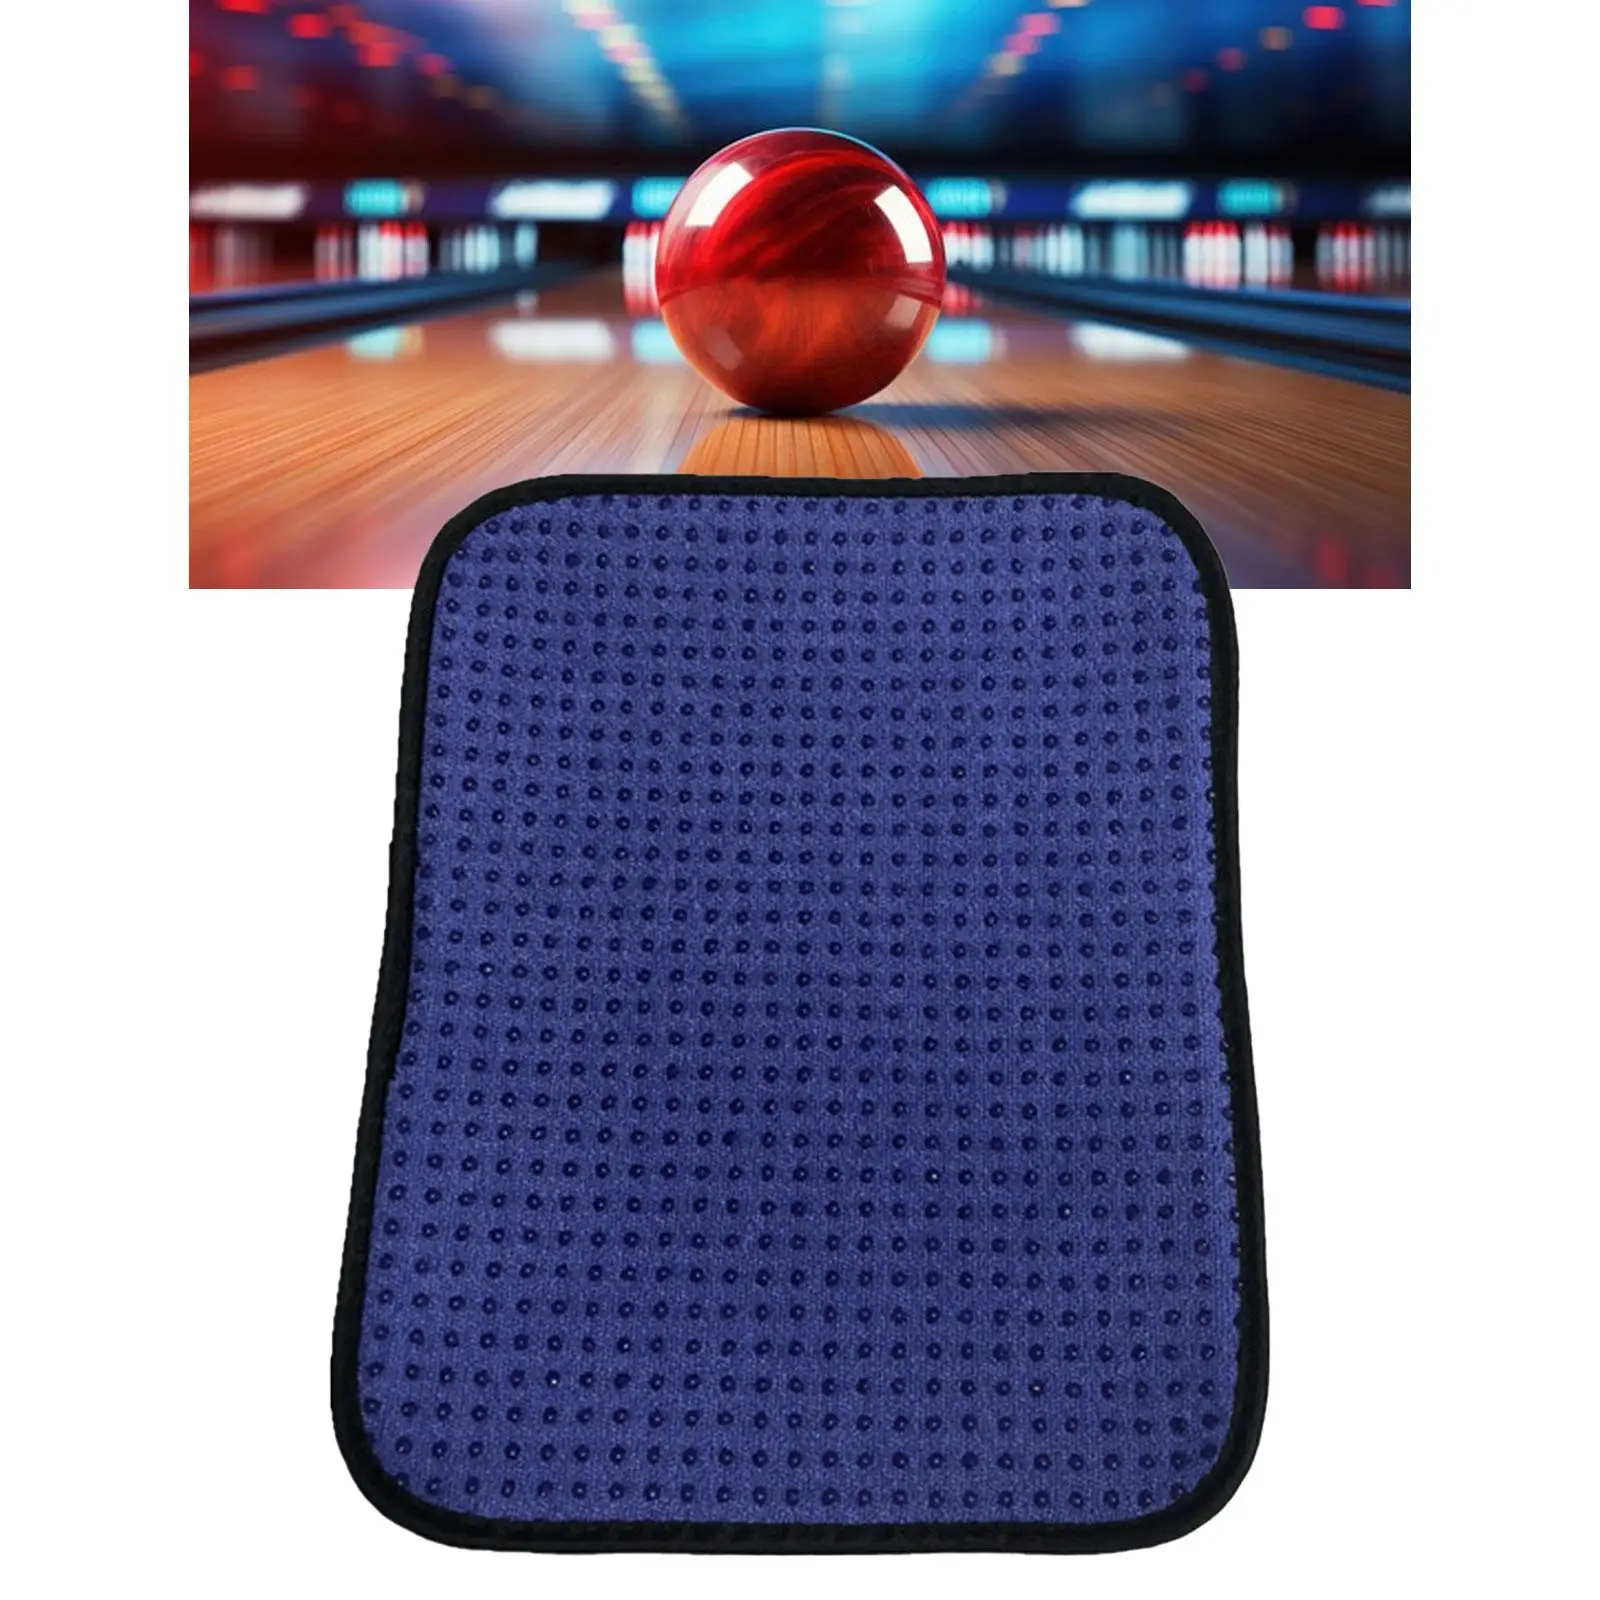 Bowling Ball Shammy Pad Rag Bowling Ball Towel Bowling Towel Clean Bowling Ball from Dirt and Oil to Improve Grip and Precision